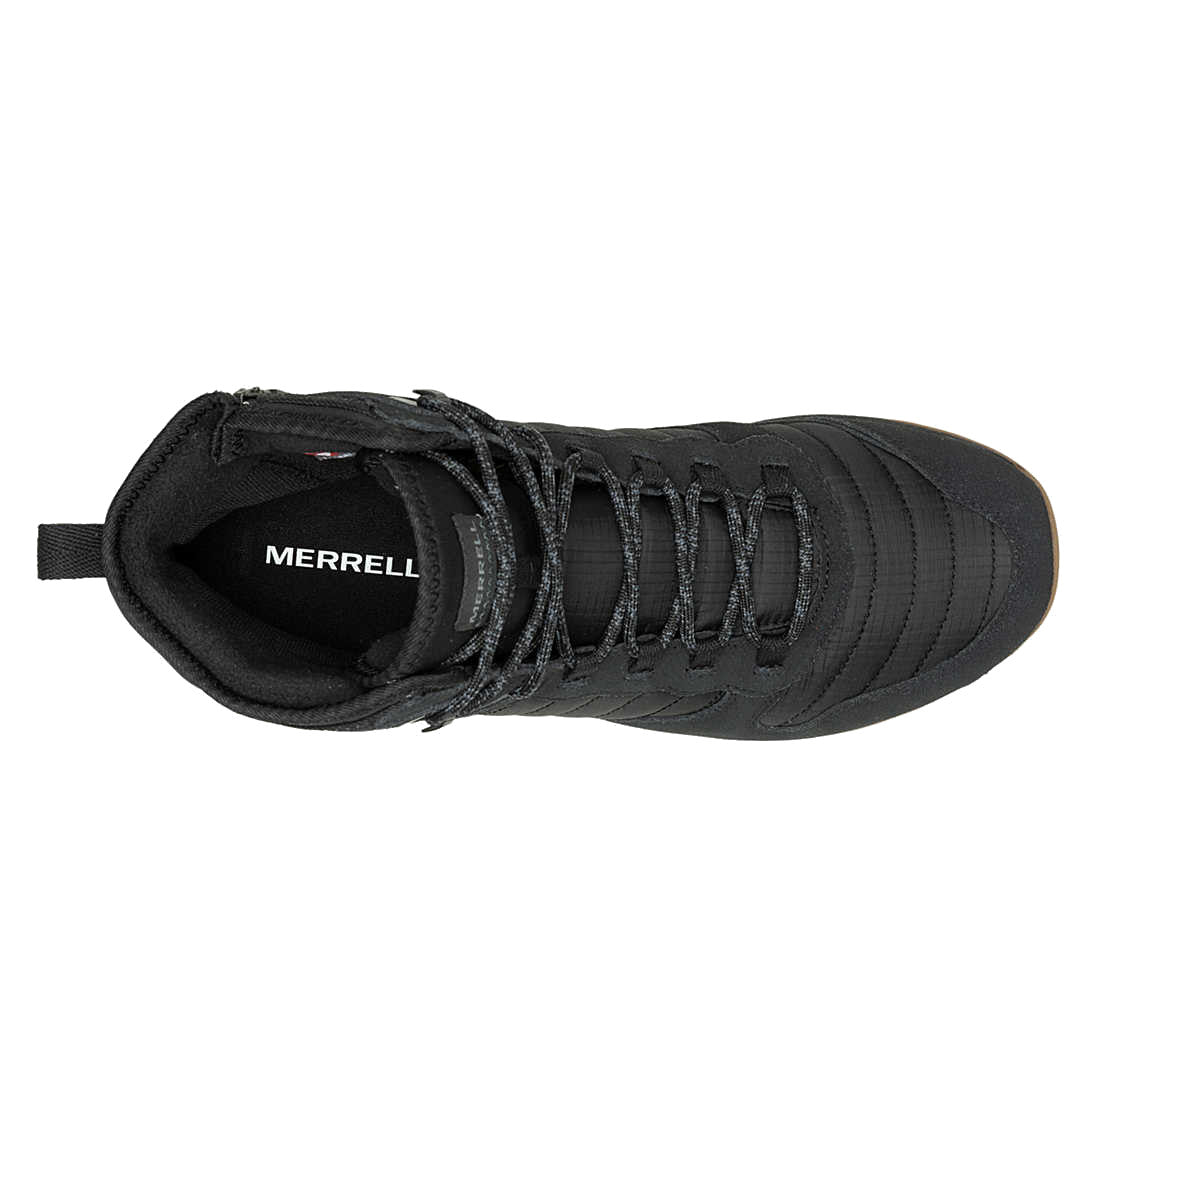 Merrell Men's Nova 3 Thermo Mid Waterproof - Black